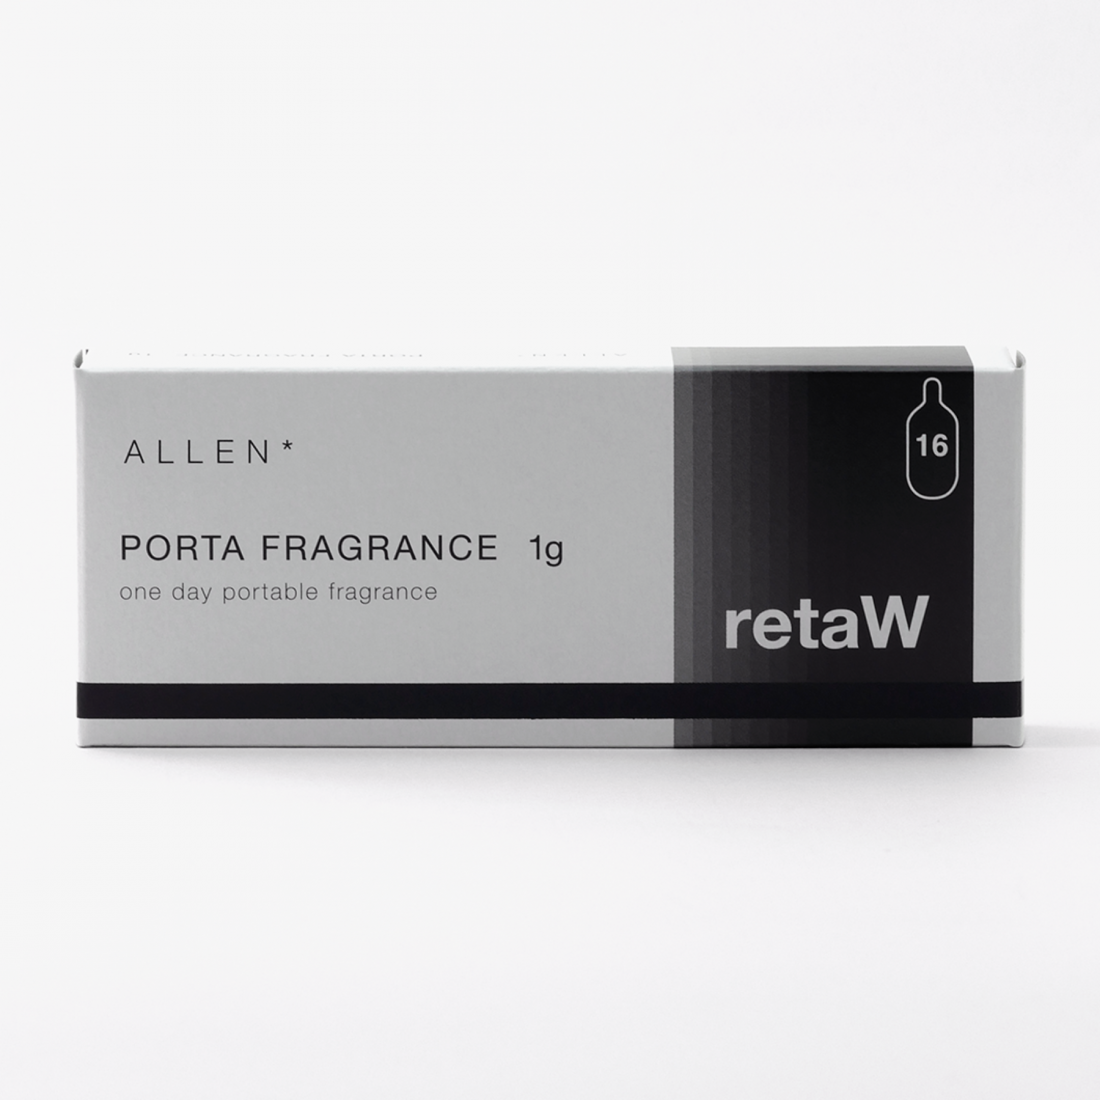 retaW/PORTA FRAGRANCE ALLEN*